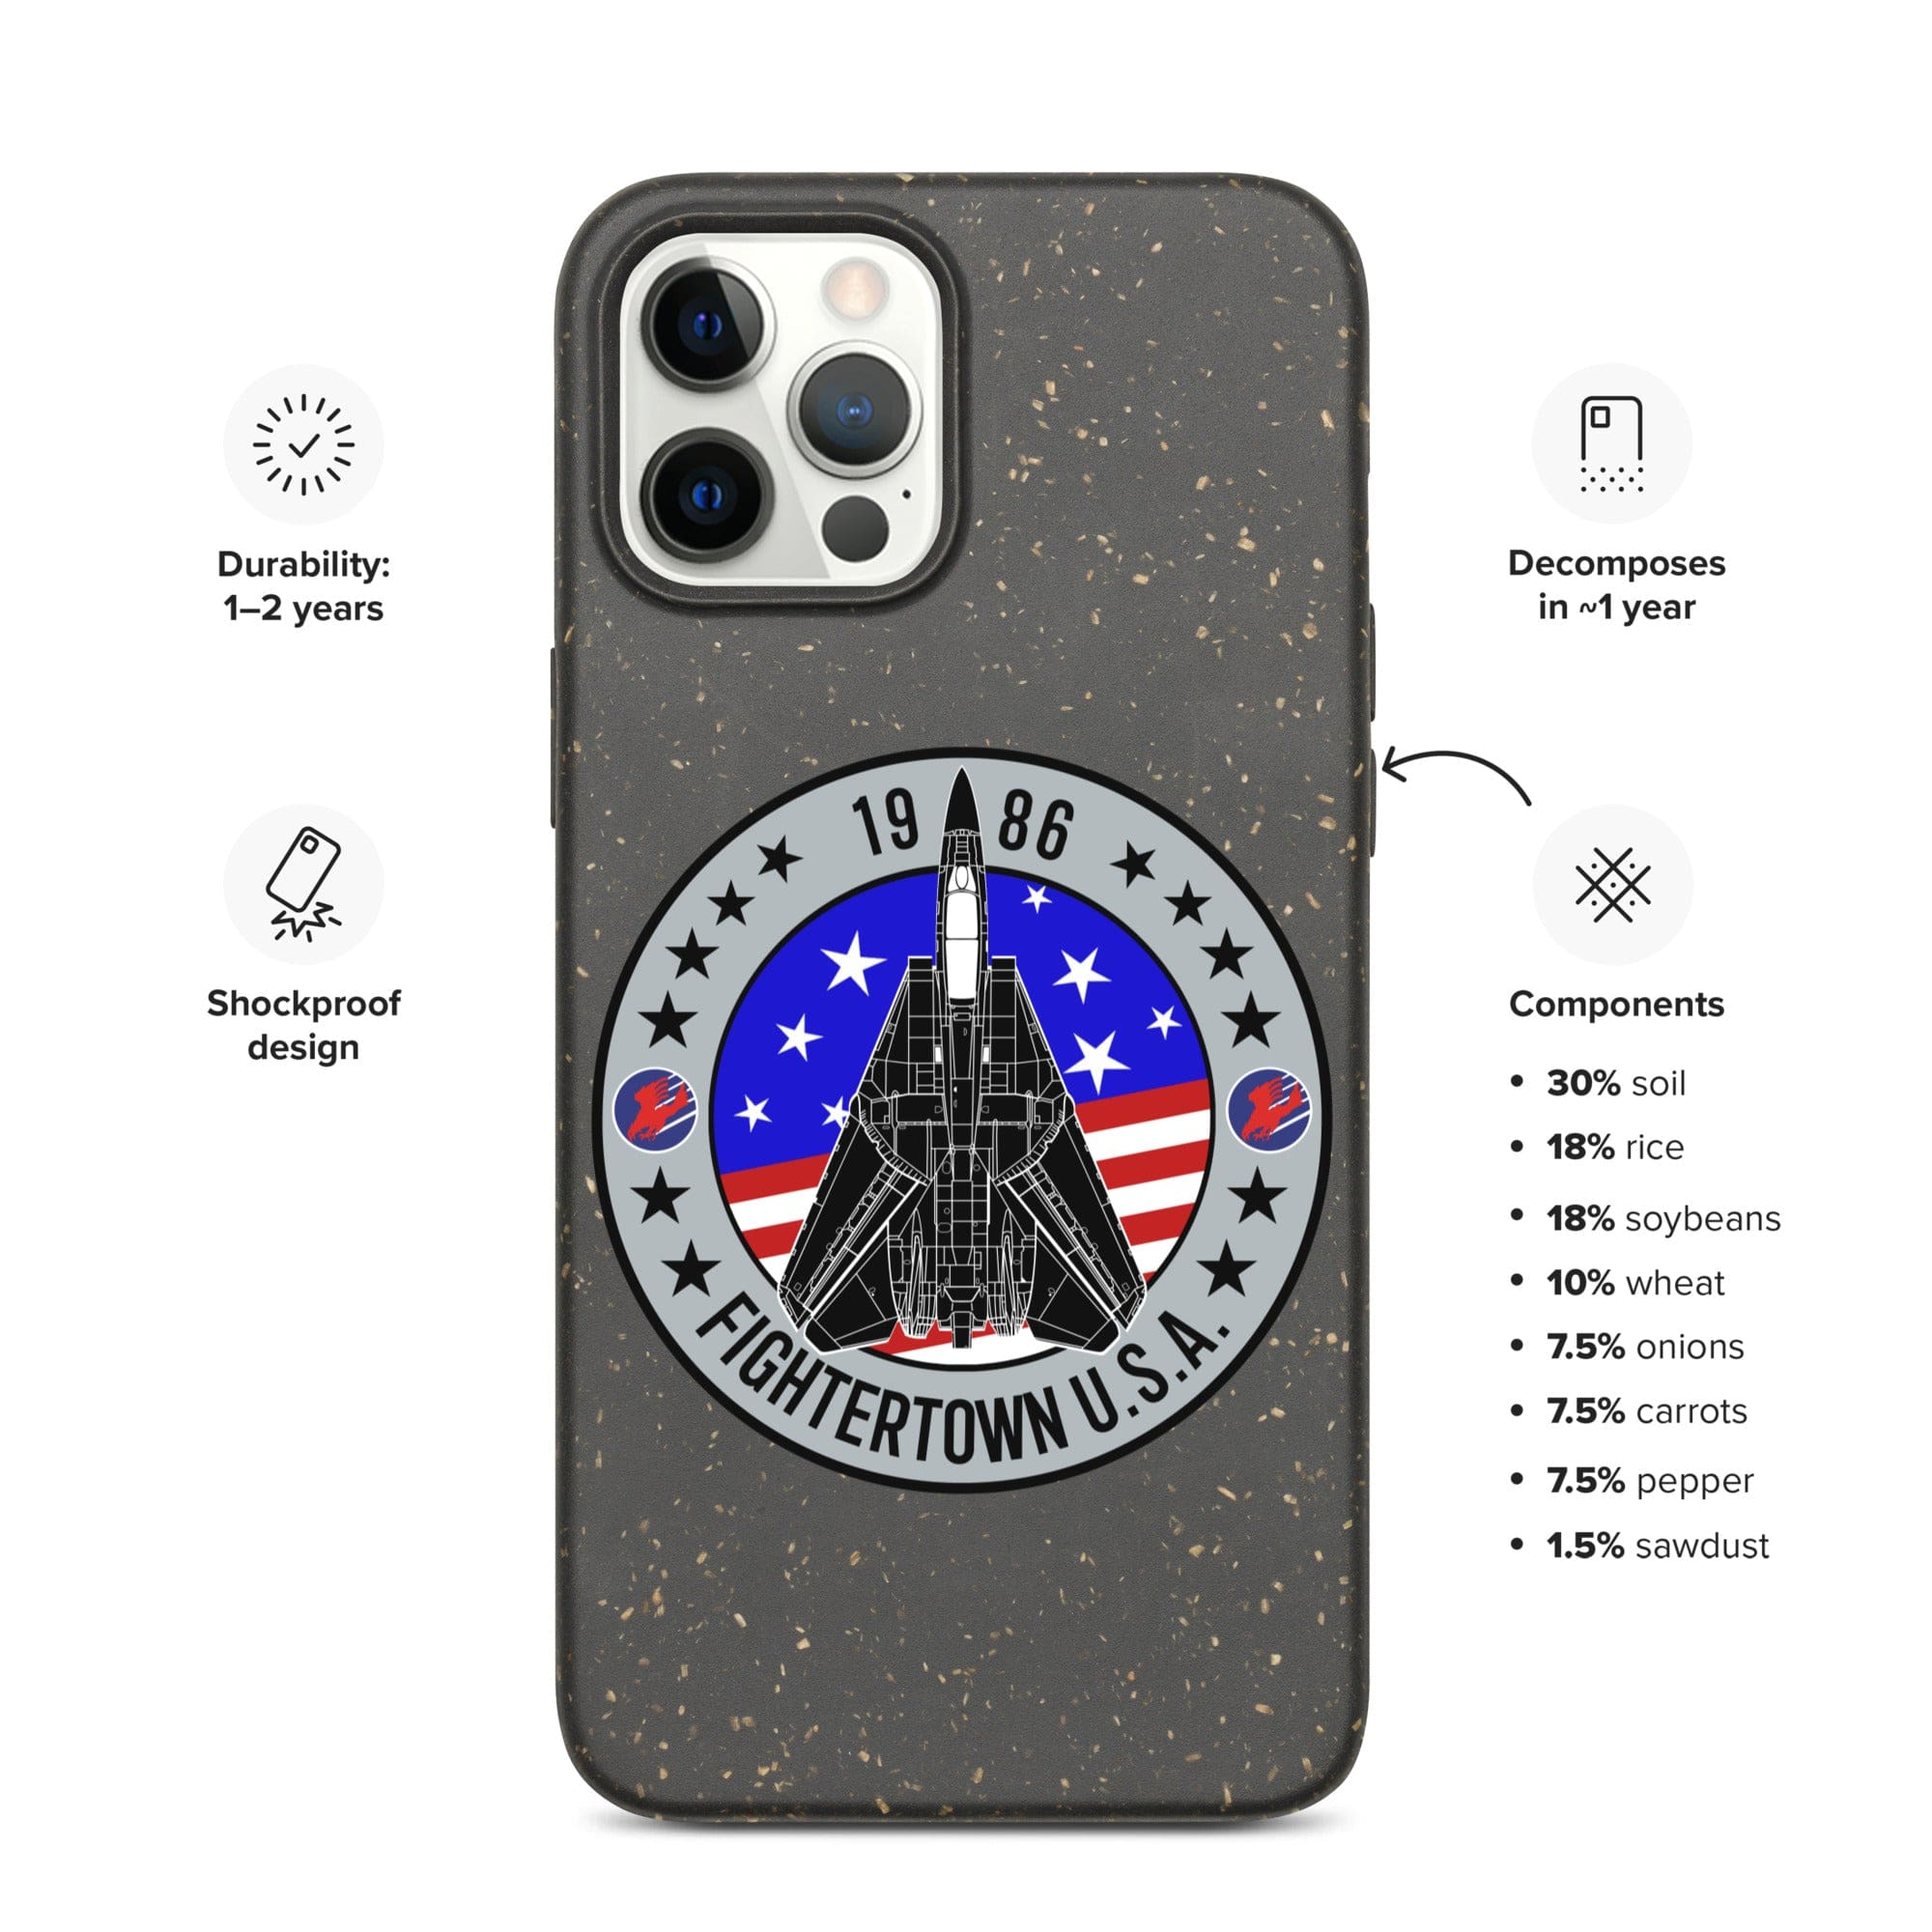 Top Gun Fans Mobile Phone Cases iPhone 12 Pro Max F-14 Tomcat Fightertown Organic iPhone Case